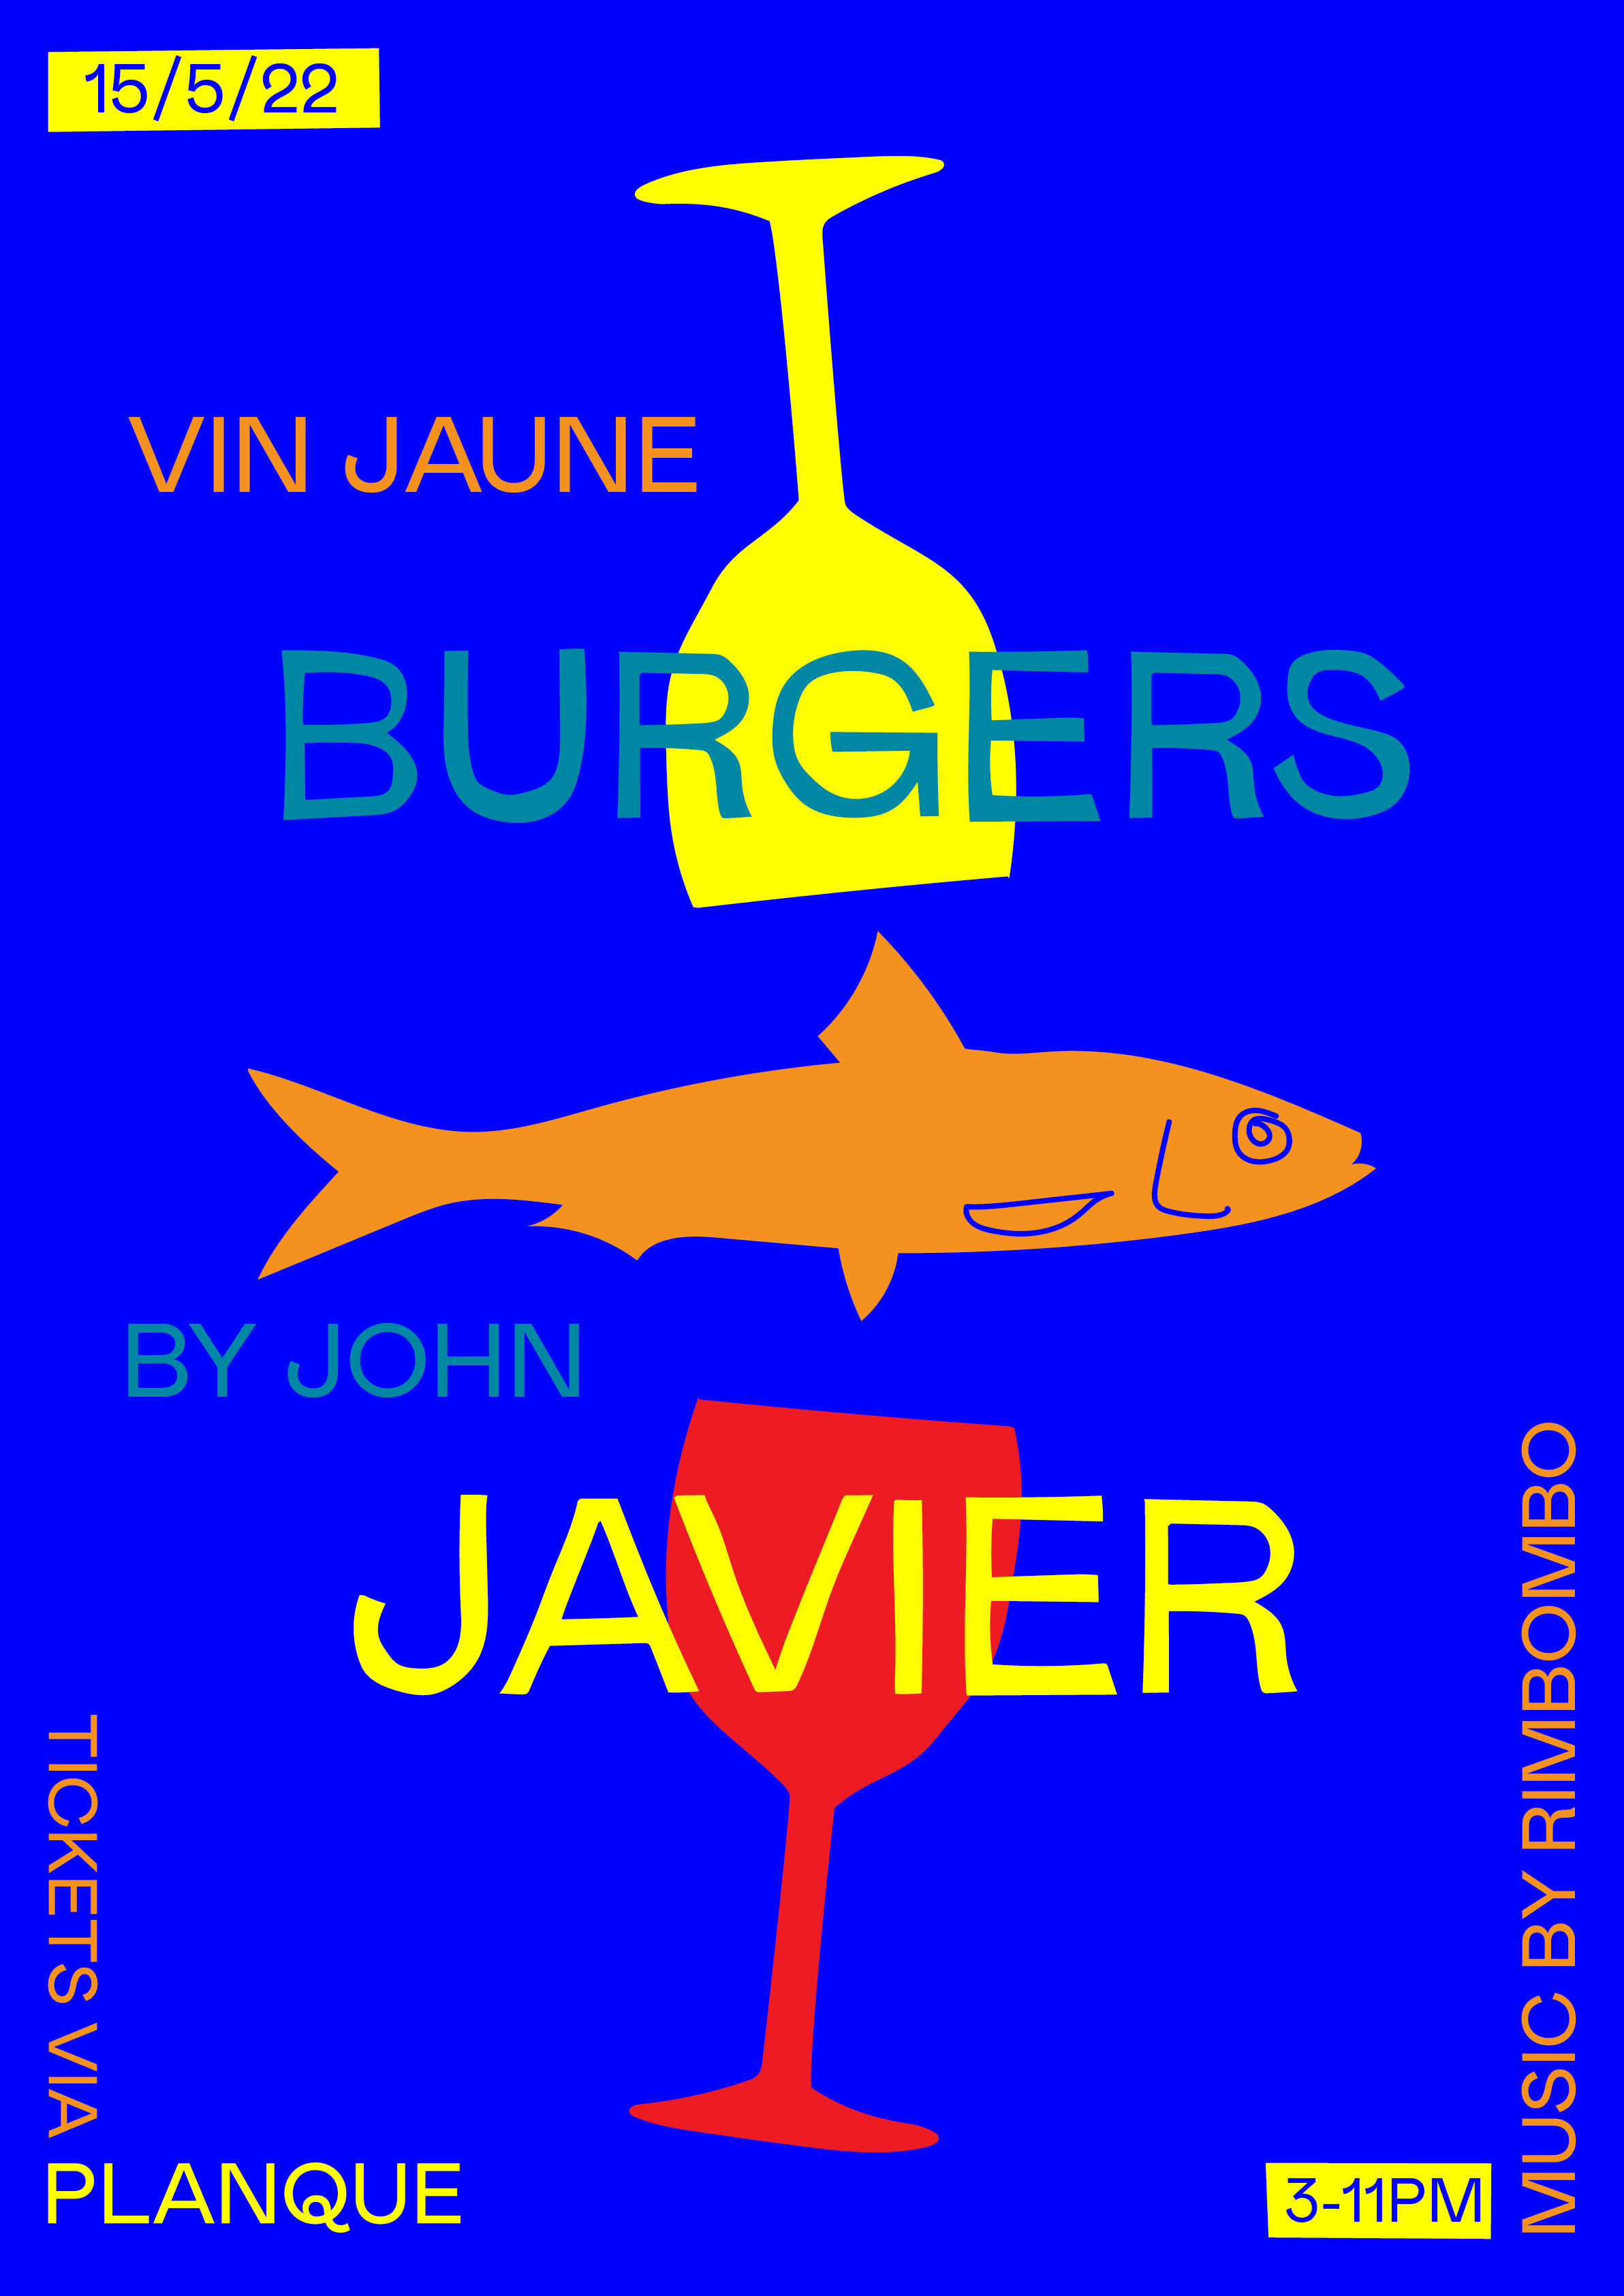 Vin Jaune Burgers by John Javier